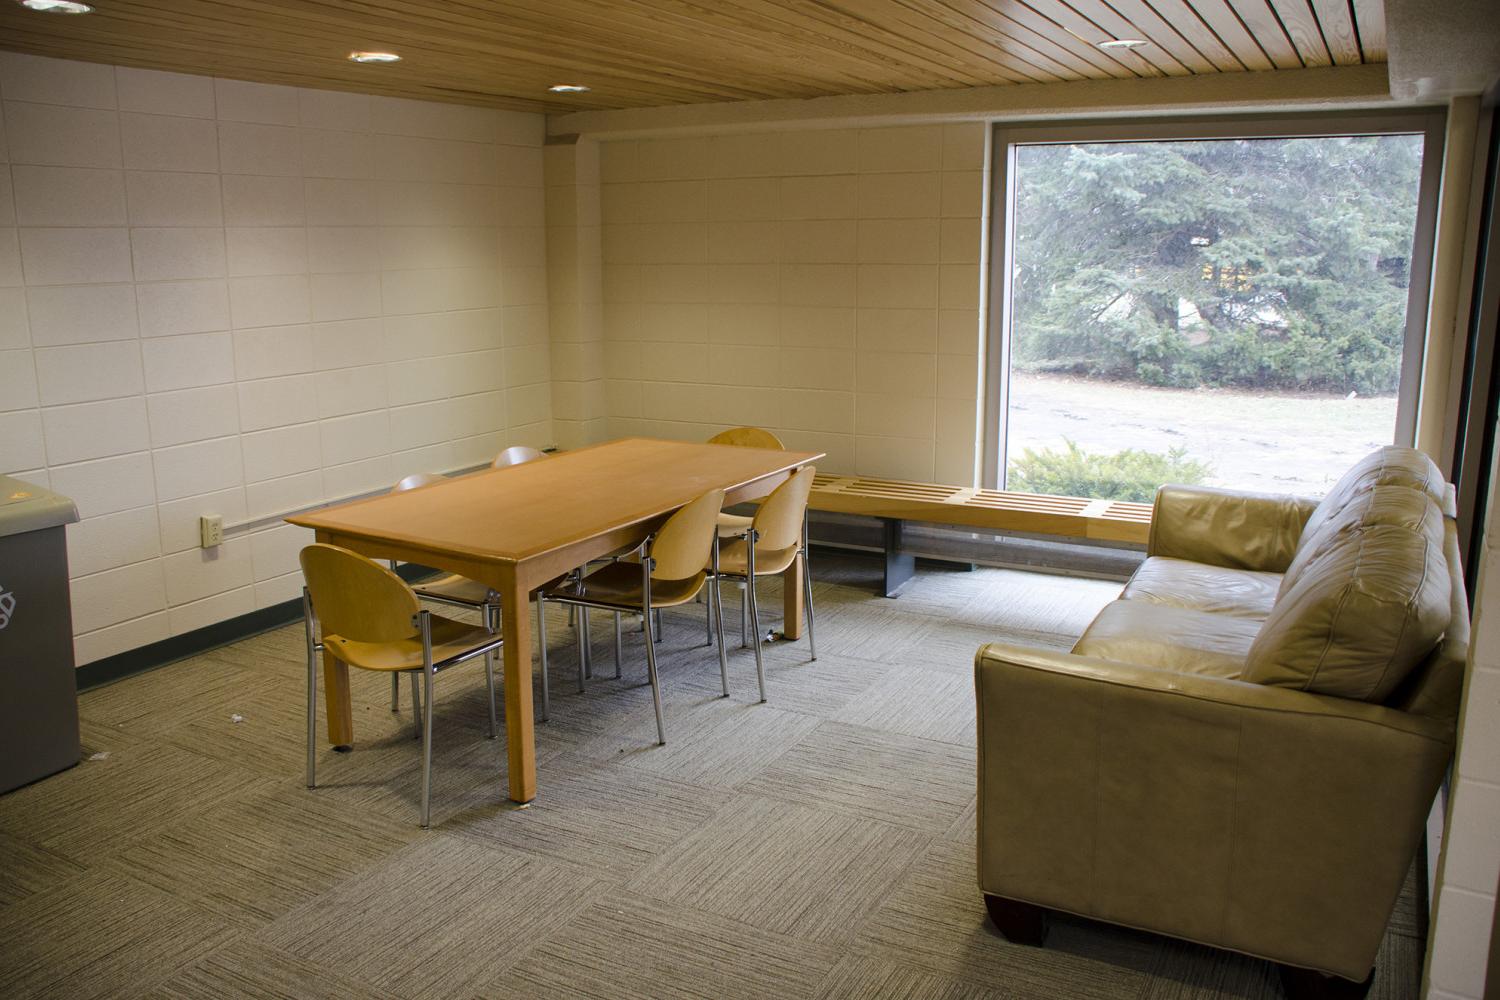 Madrigrano大厅在每一层都为学生提供休息室.